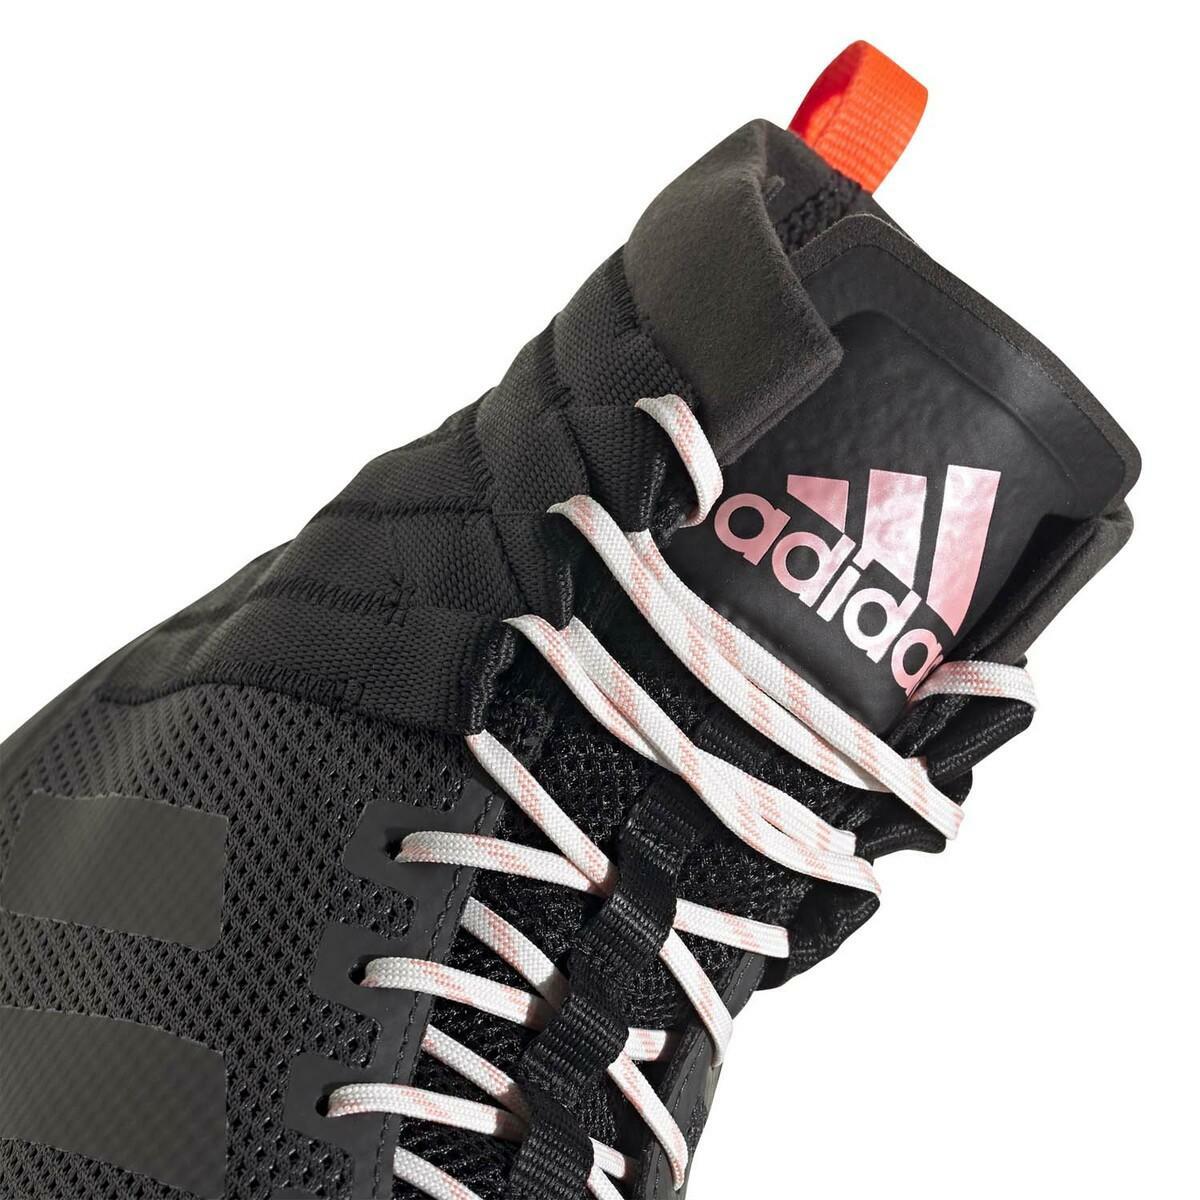 Adidas Speedex 18 Boxing Boots Black/Red FW0385